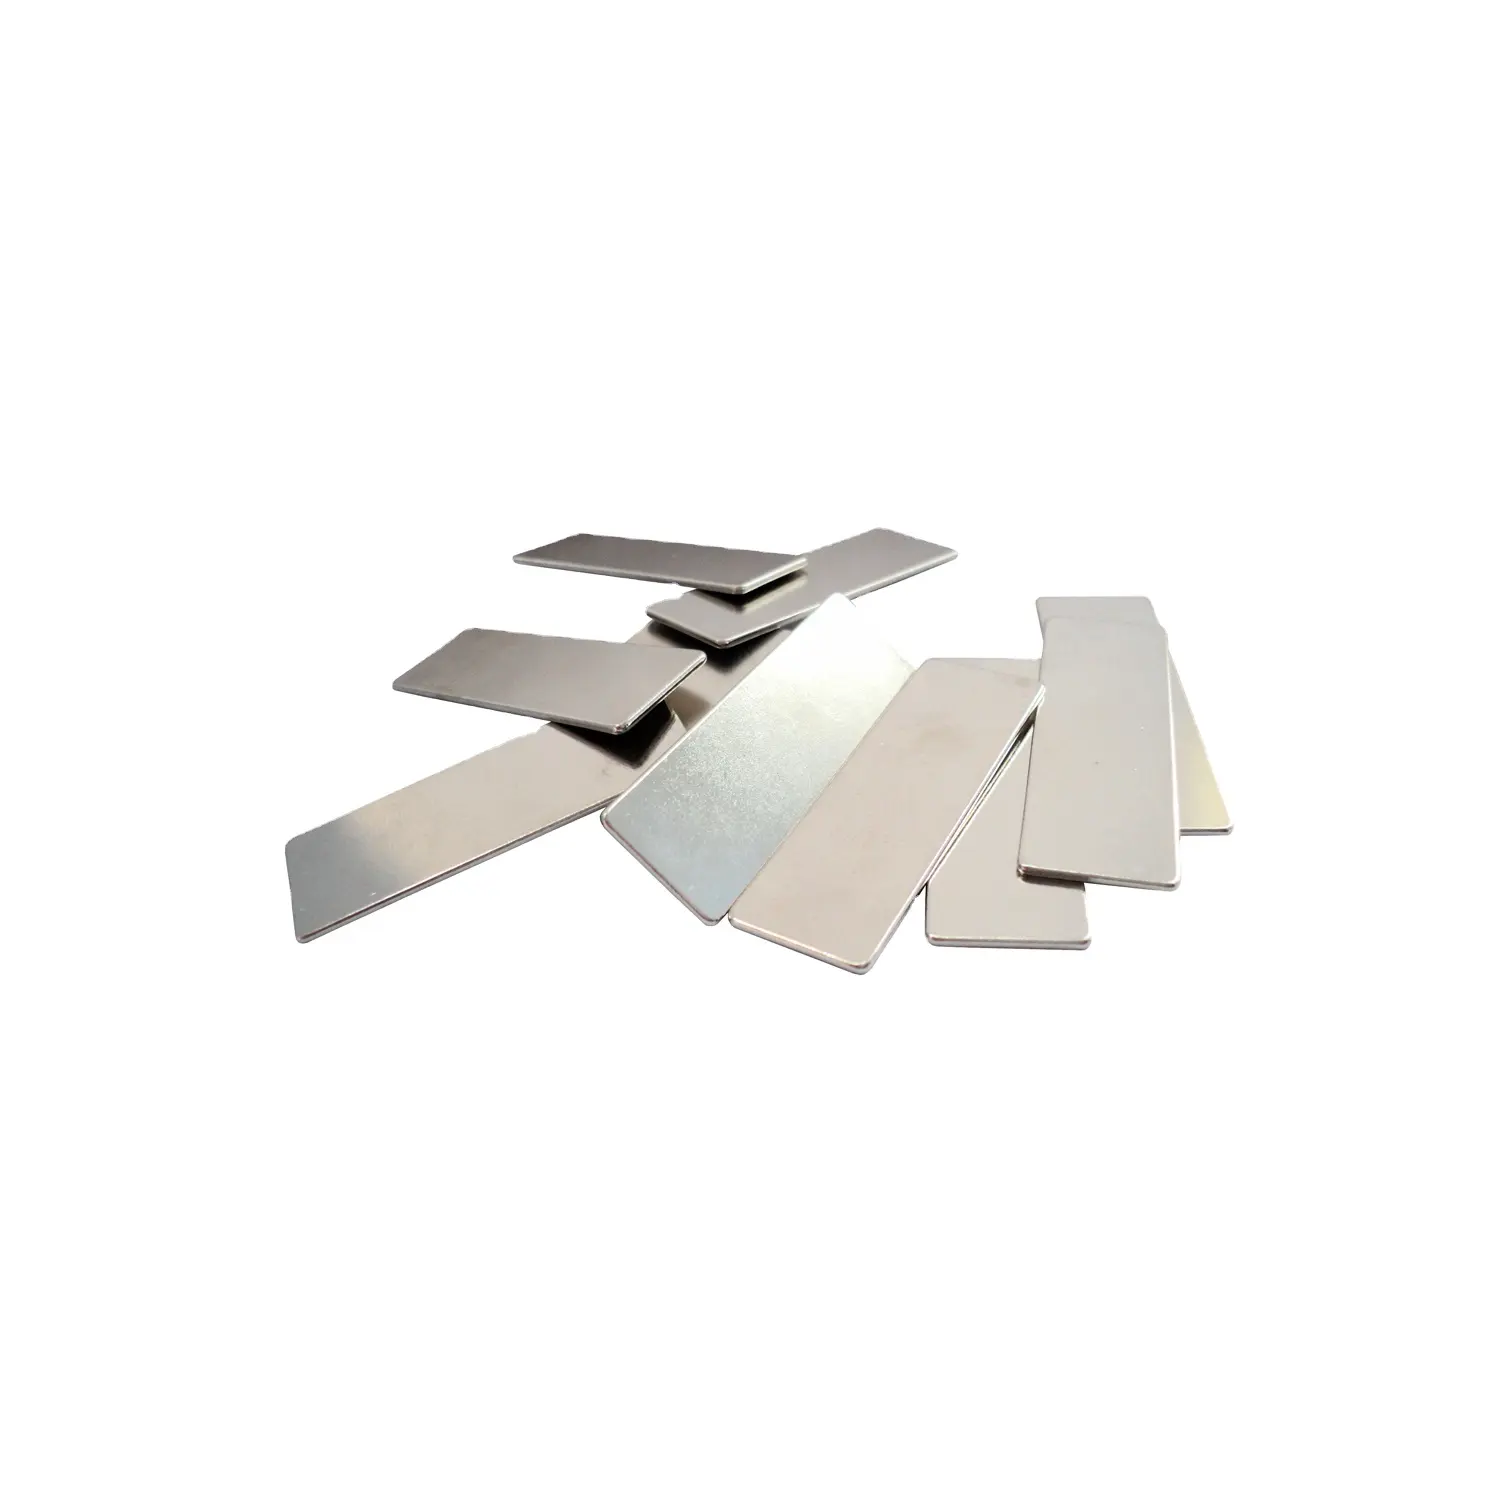 Ningbo bestway supply customized shaped neodymium permanent magnet